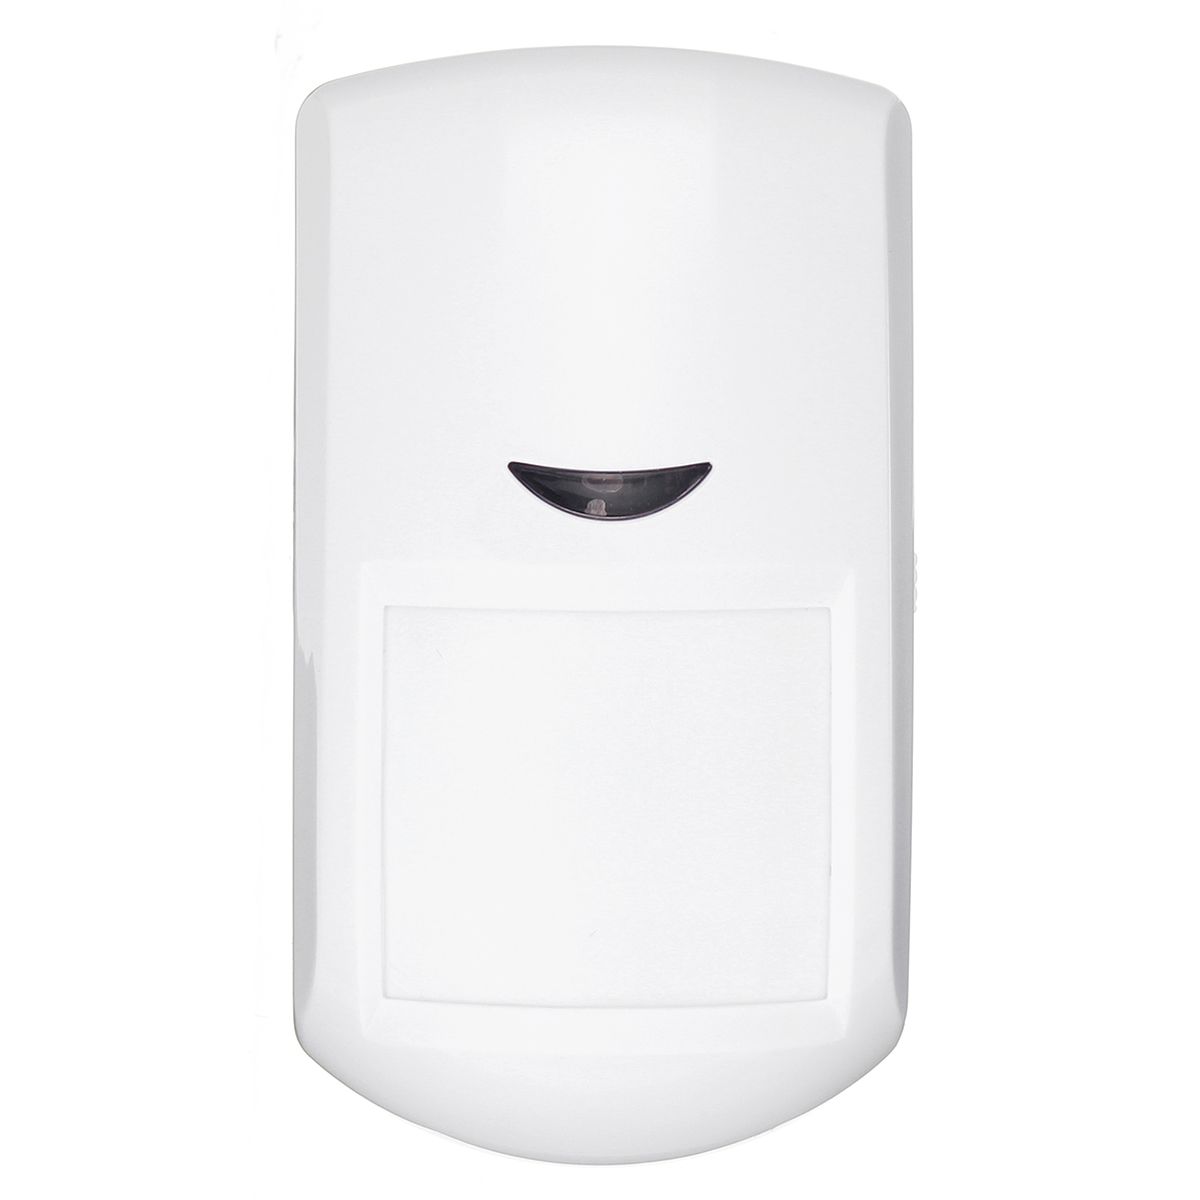 Wireless-Intelligent-PIR-Infrared-Sensor-Security-Detector-Home-Alarm-System-1242033